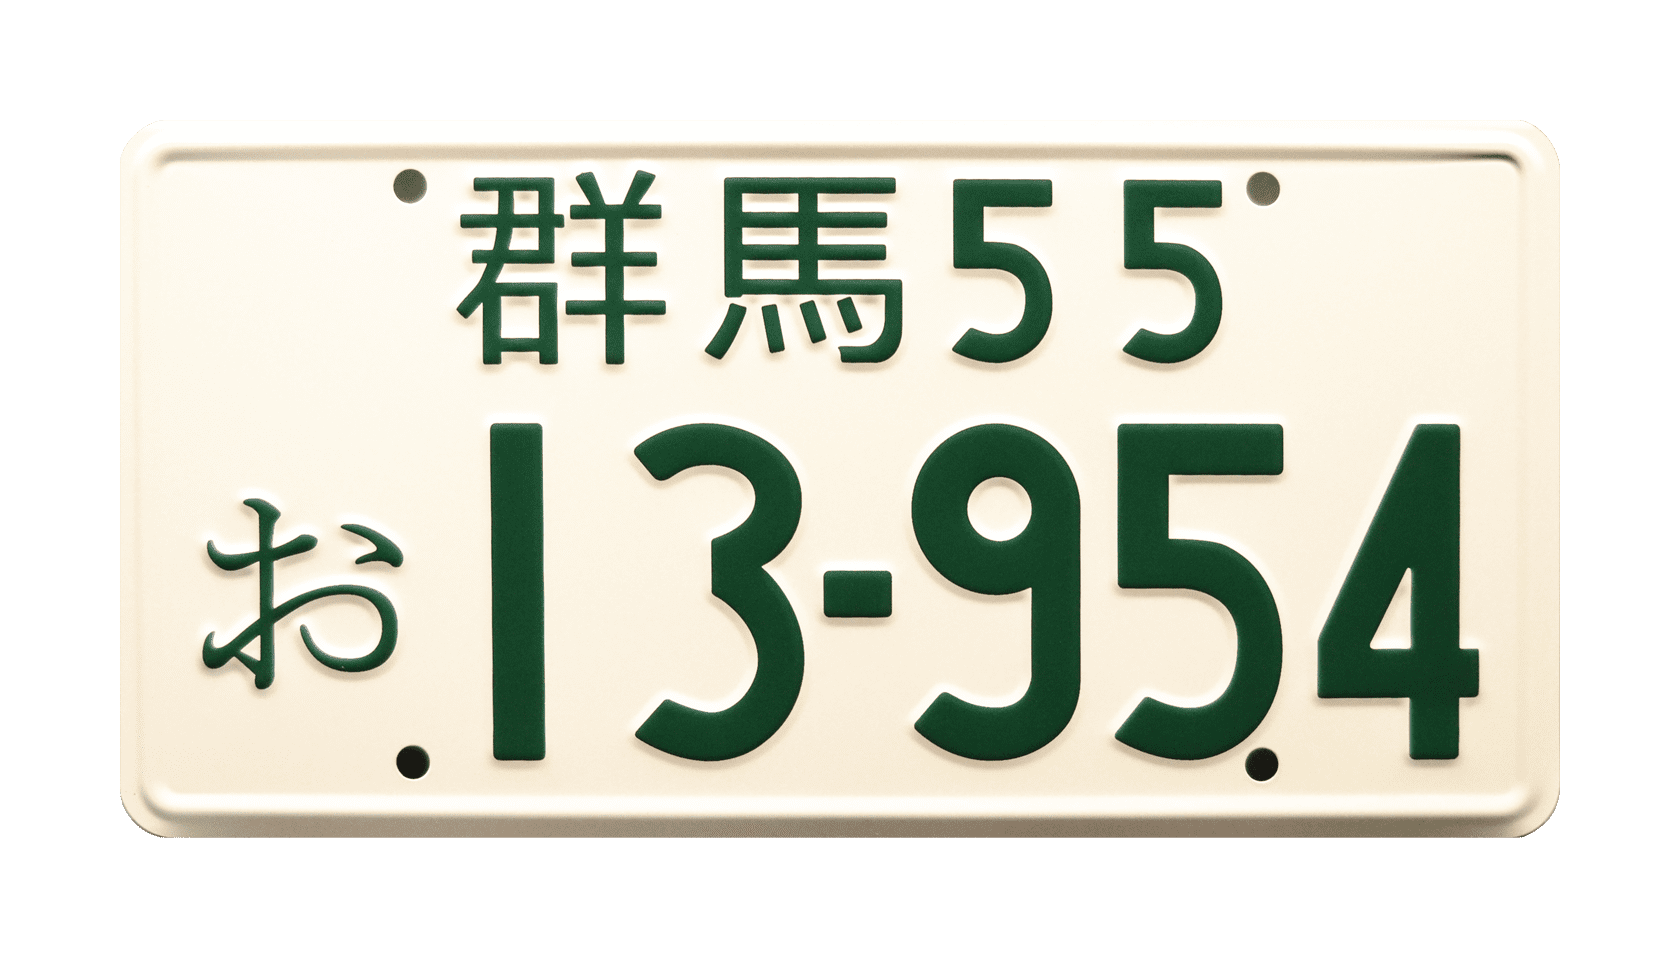 13-954 Metal Stamped License Plate Initial D